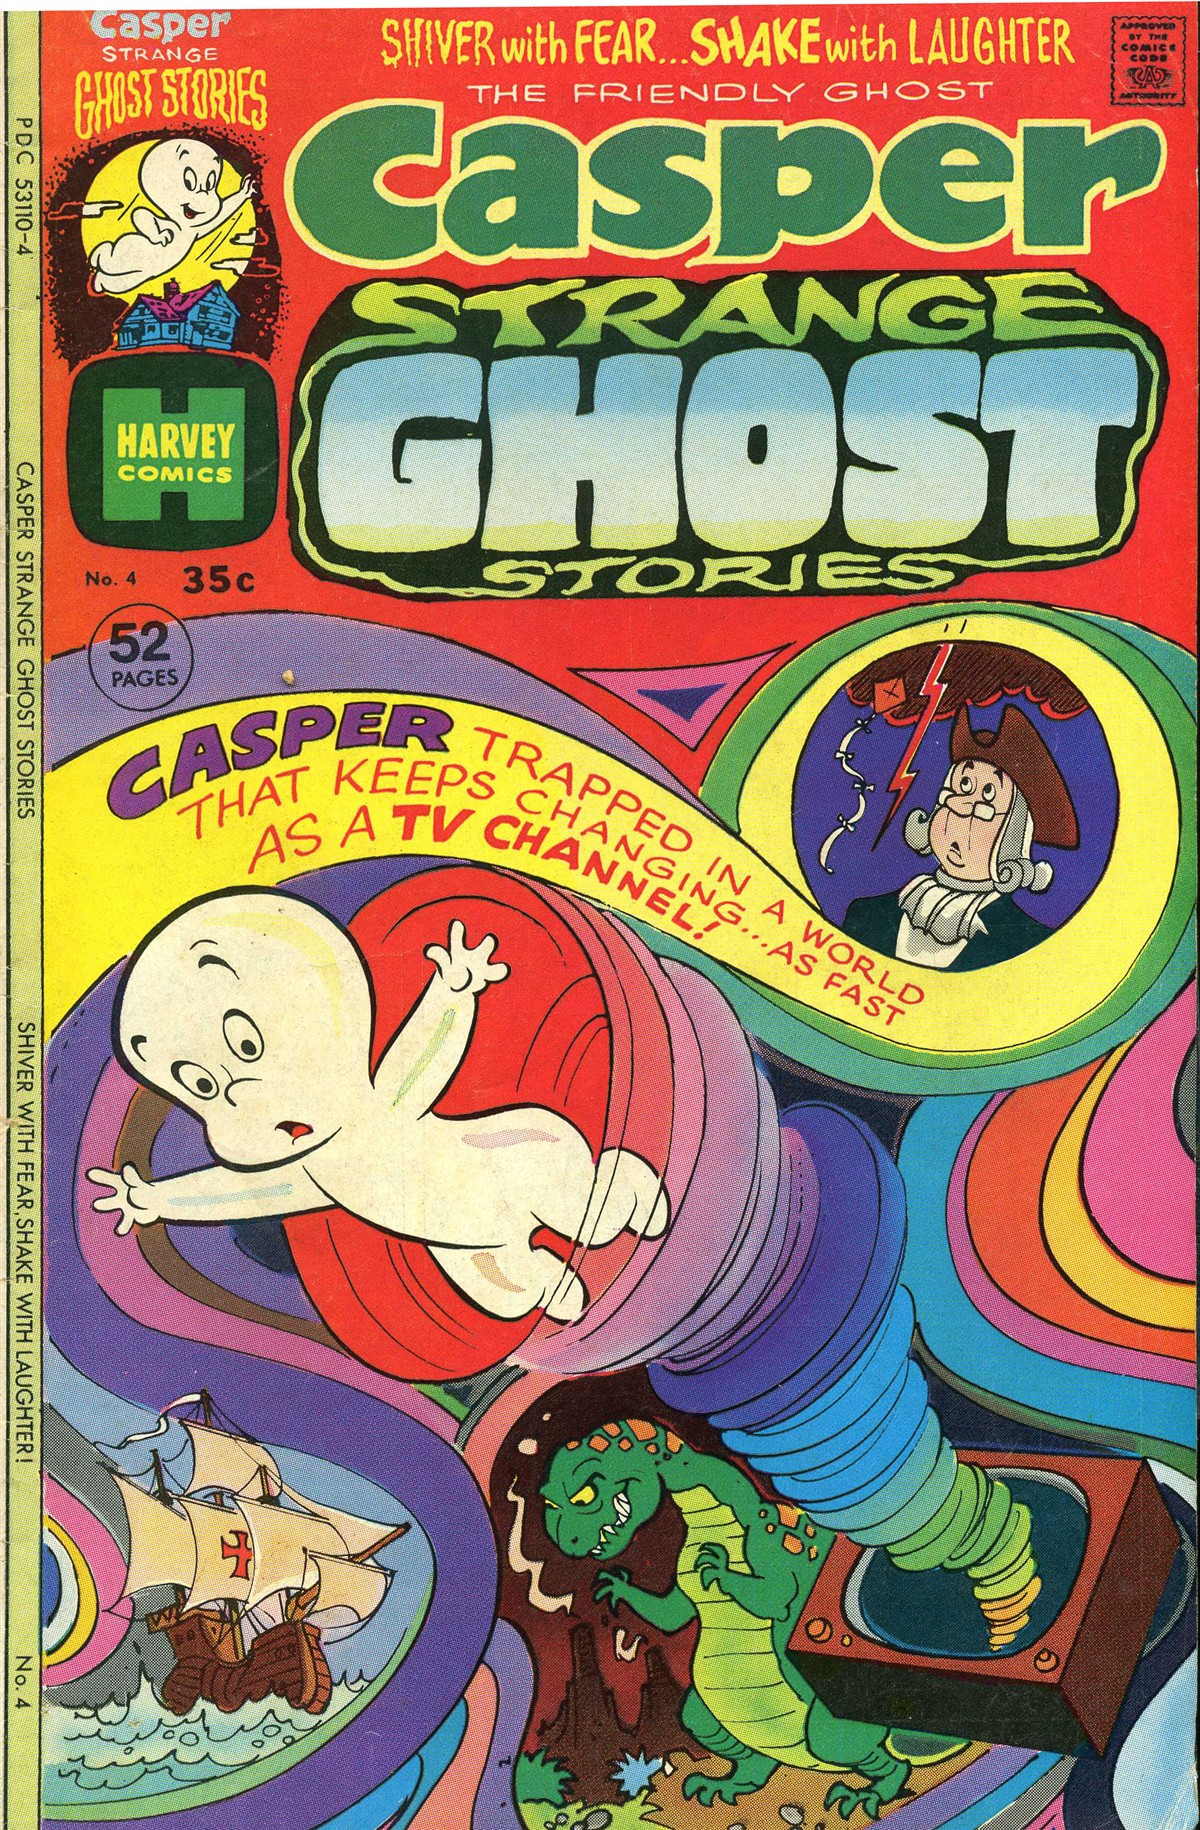 Read online Casper Strange Ghost Stories comic -  Issue #4 - 1